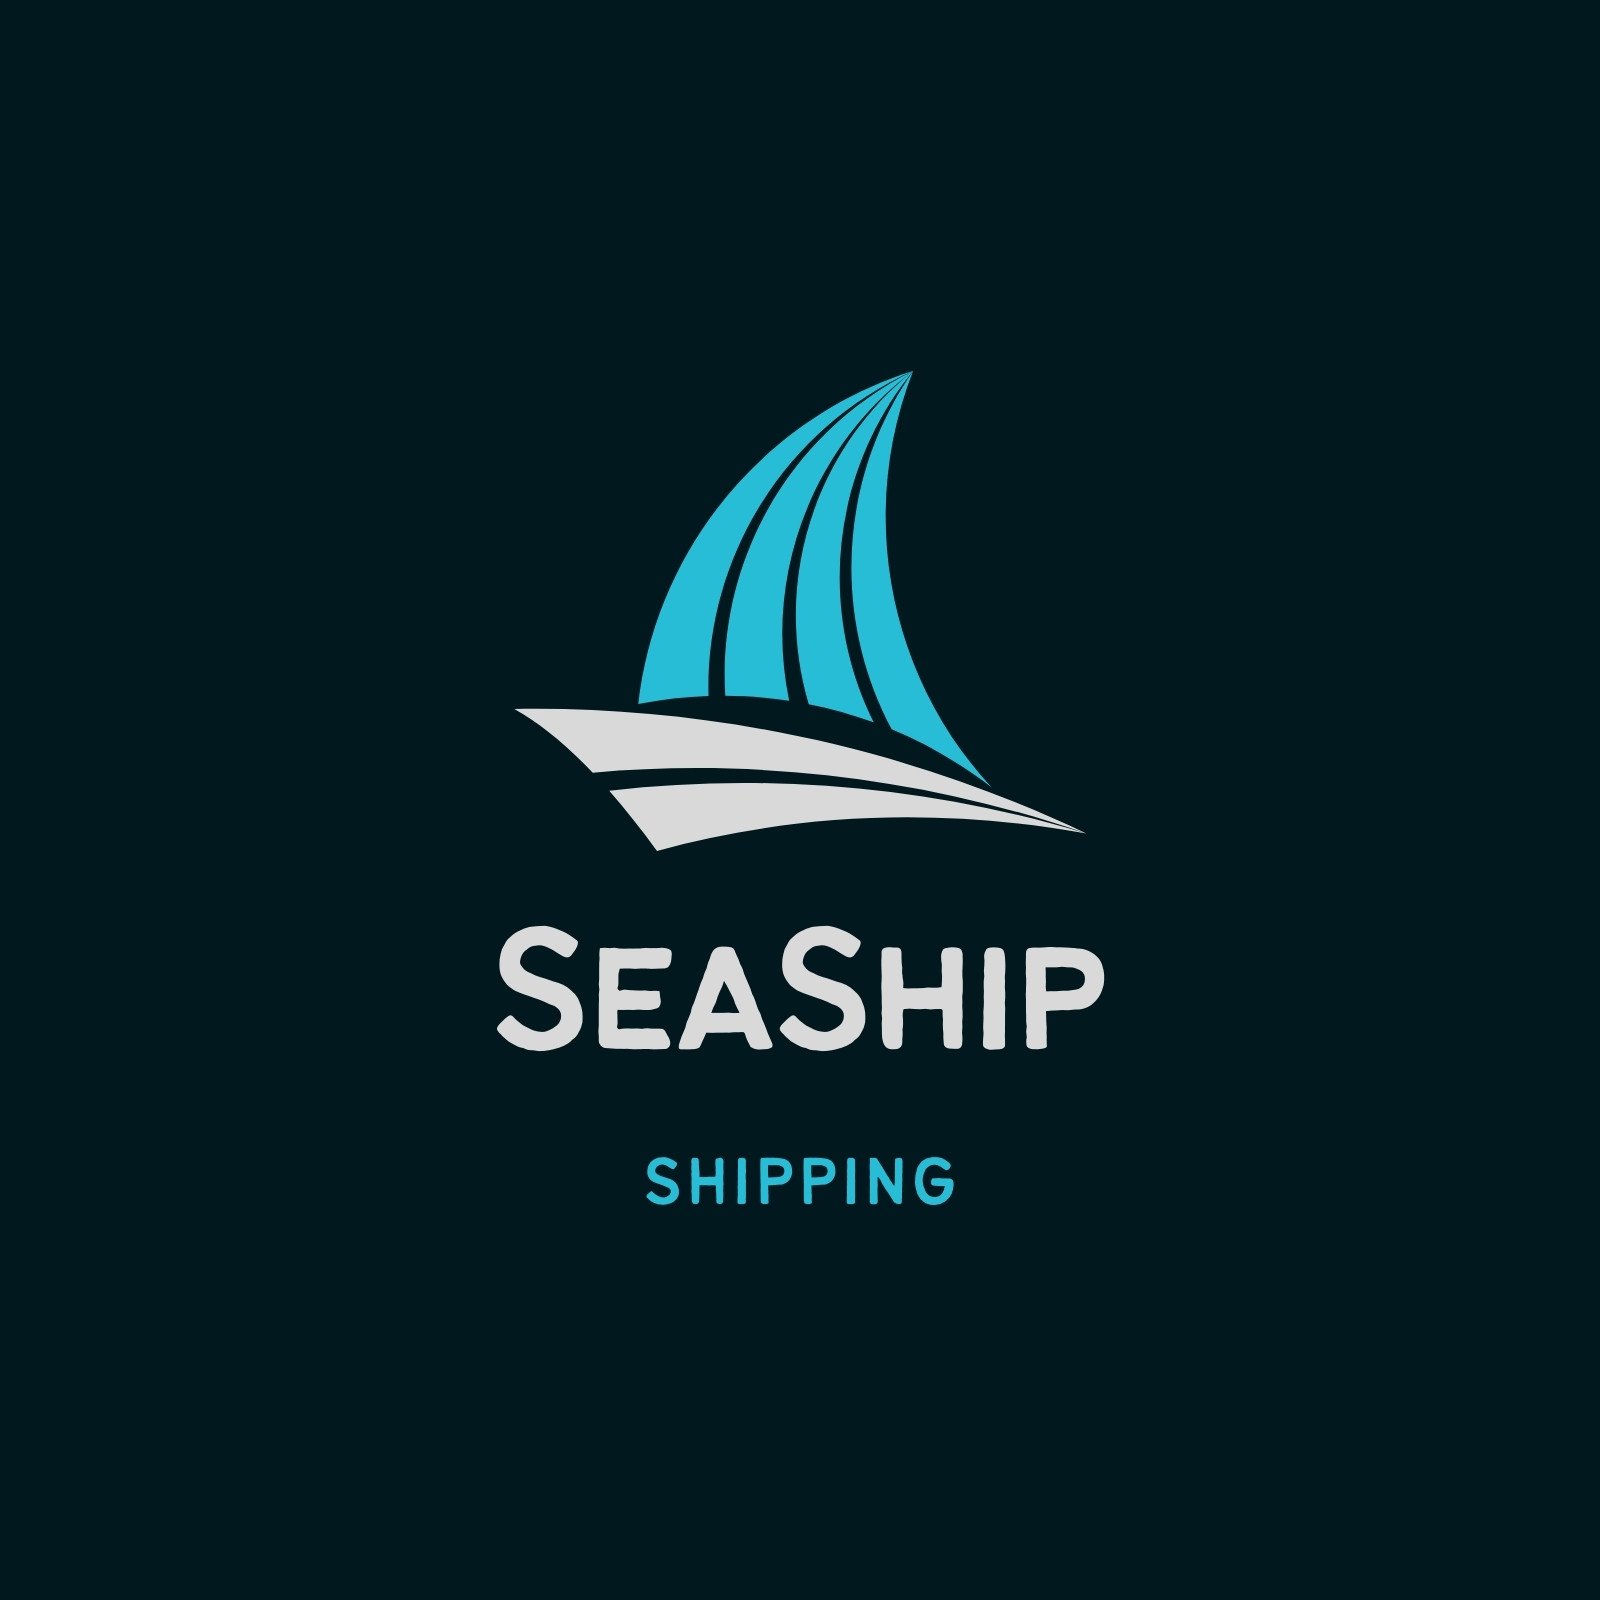 Shipping Company Logo 03 Vector Download